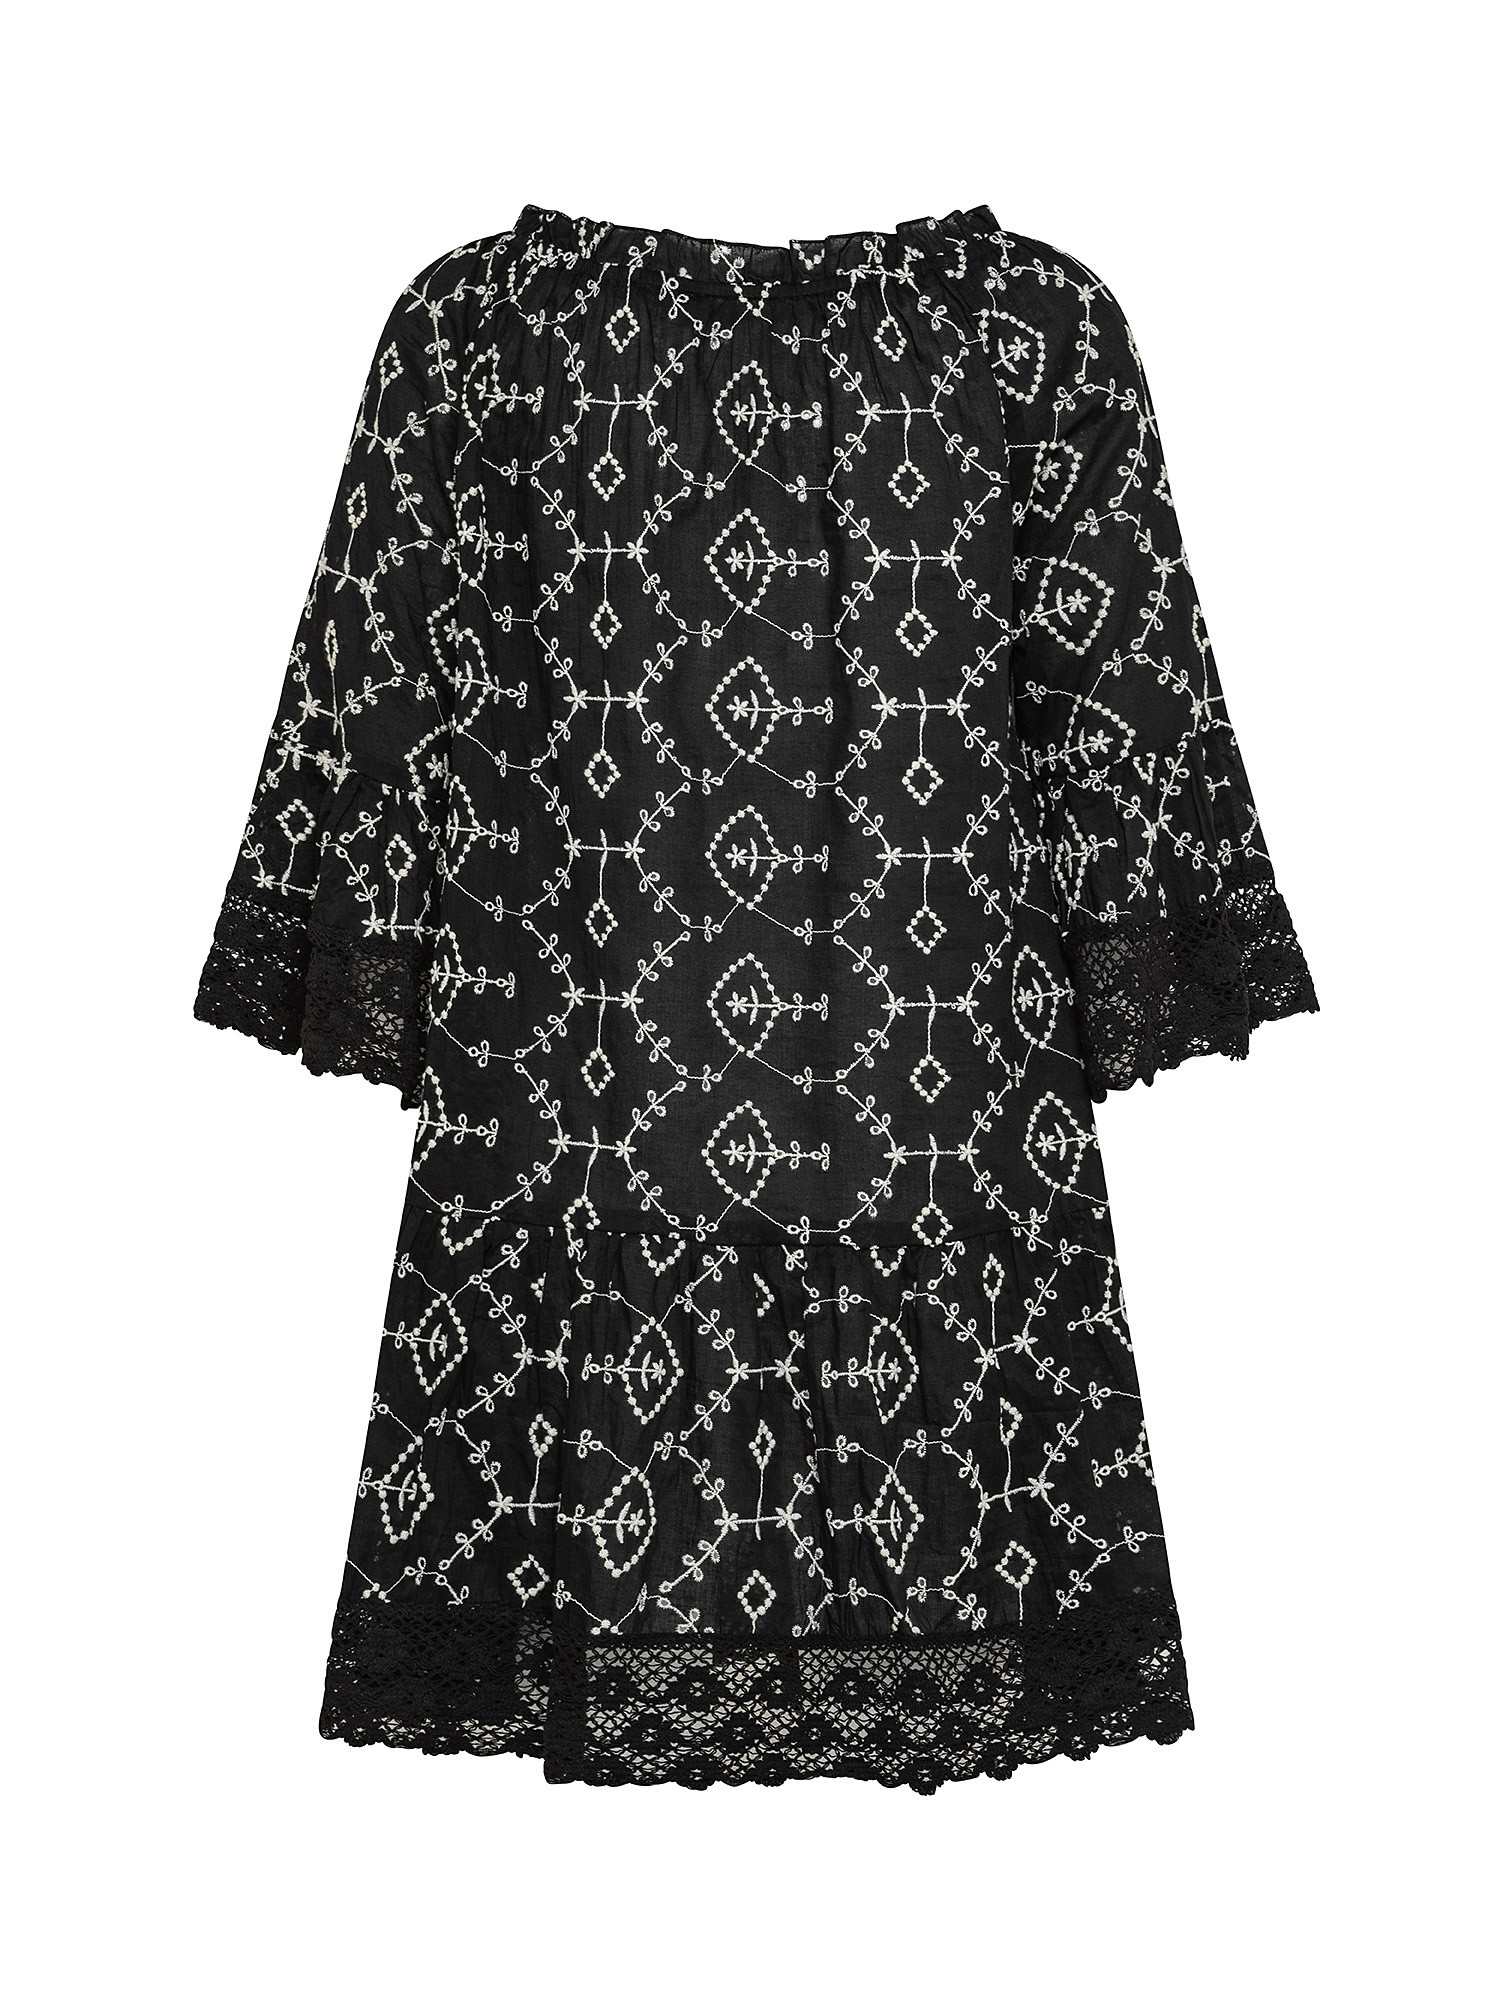 Embroidered voile dress, Black, large image number 1